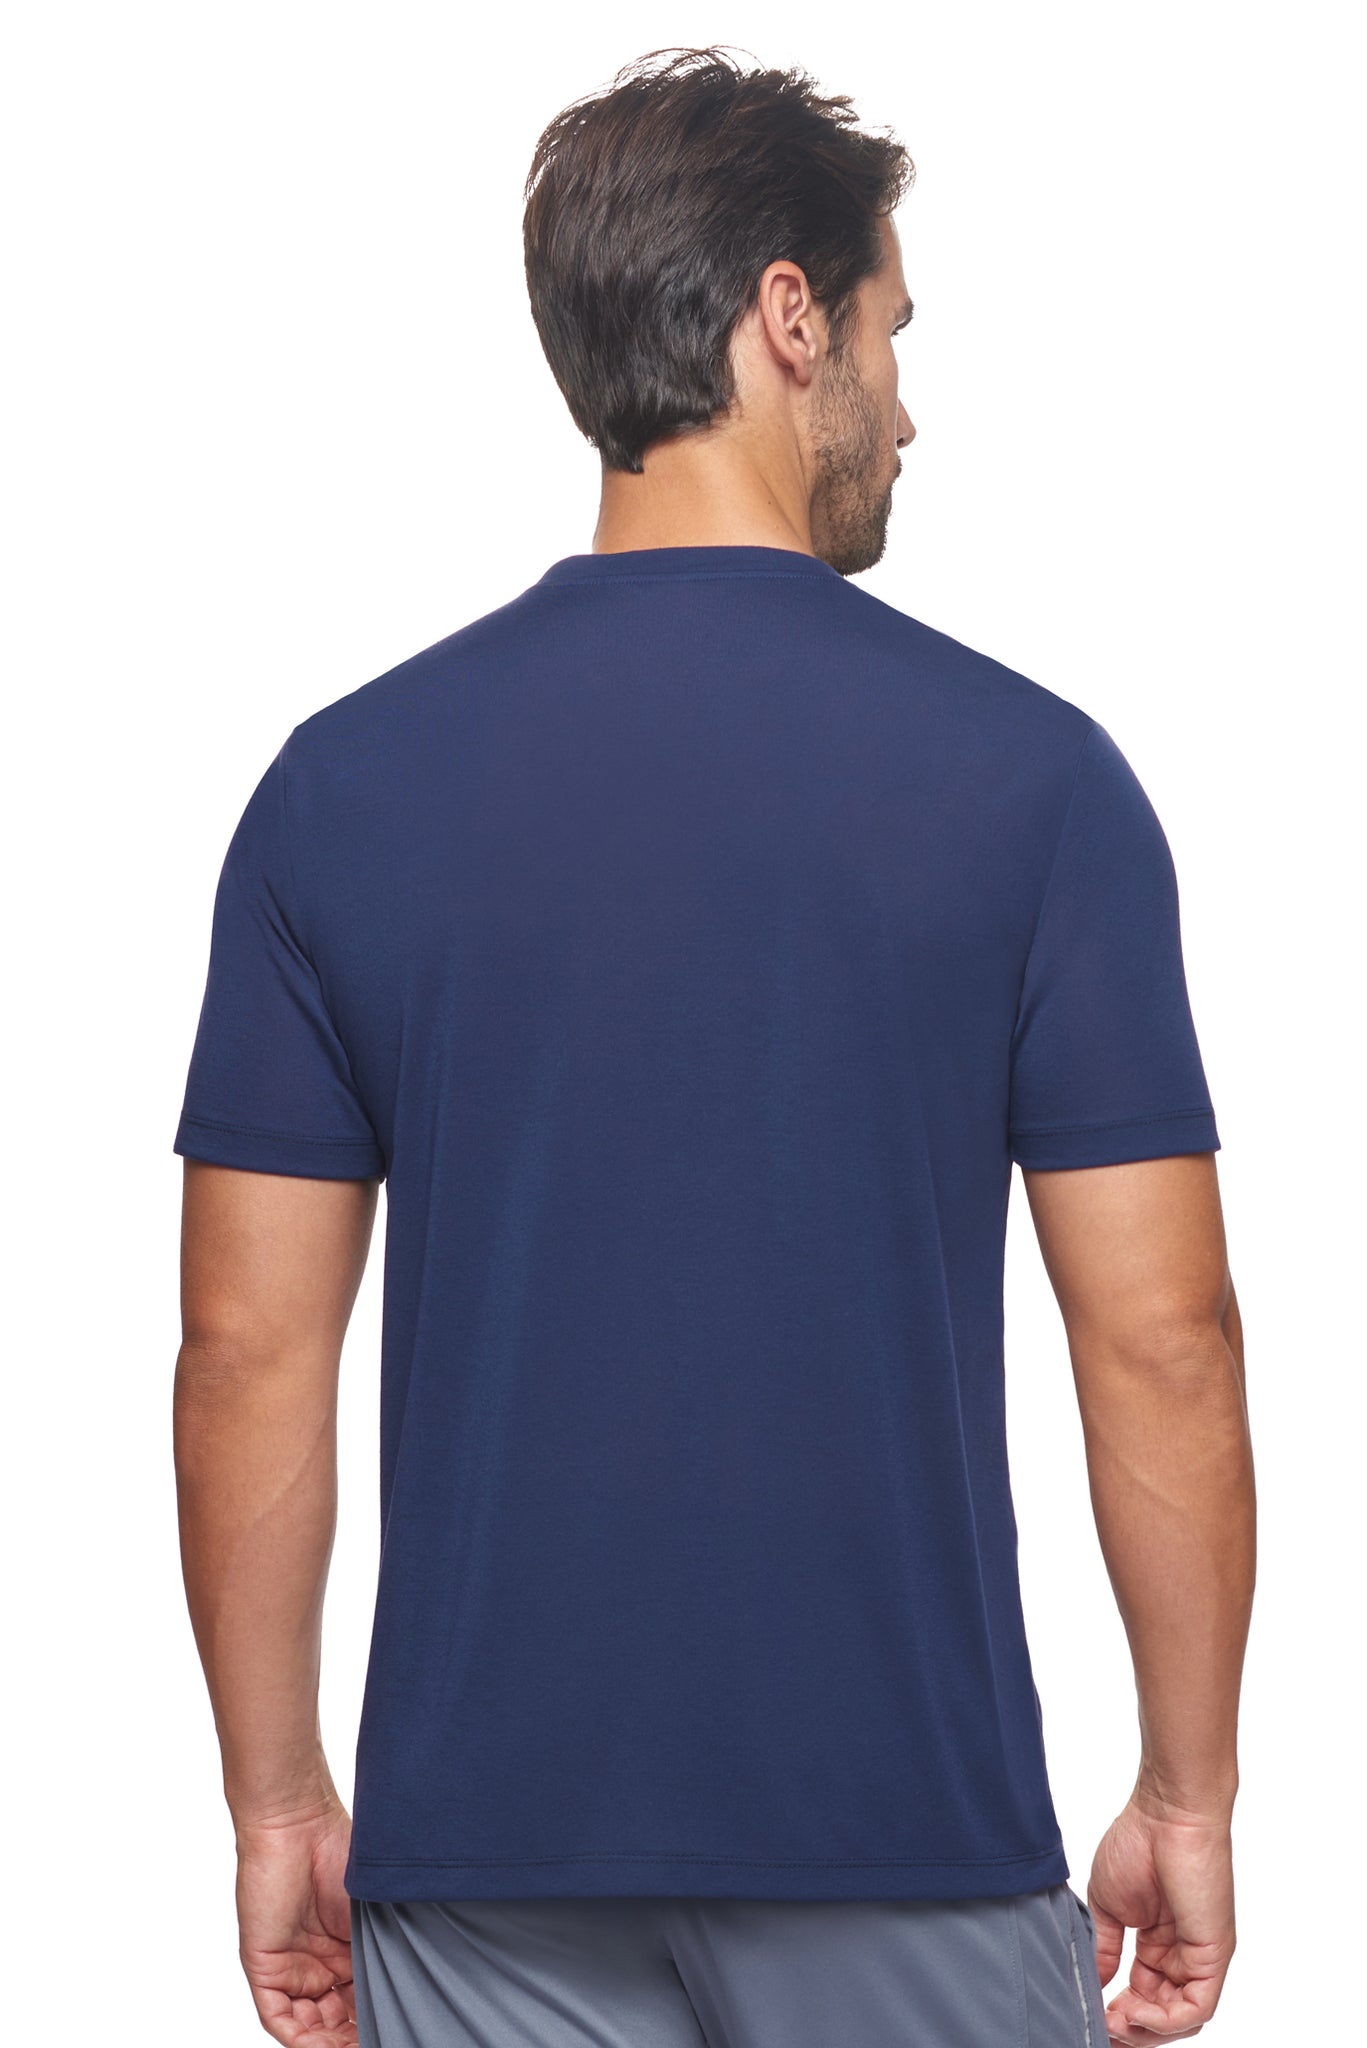 Expert Brand Wholesale Super Soft Eco-Friendly Performance Apparel Fashion Sportswear Men's Crewneck T-Shirt Made in USA Navy blue 3#navy